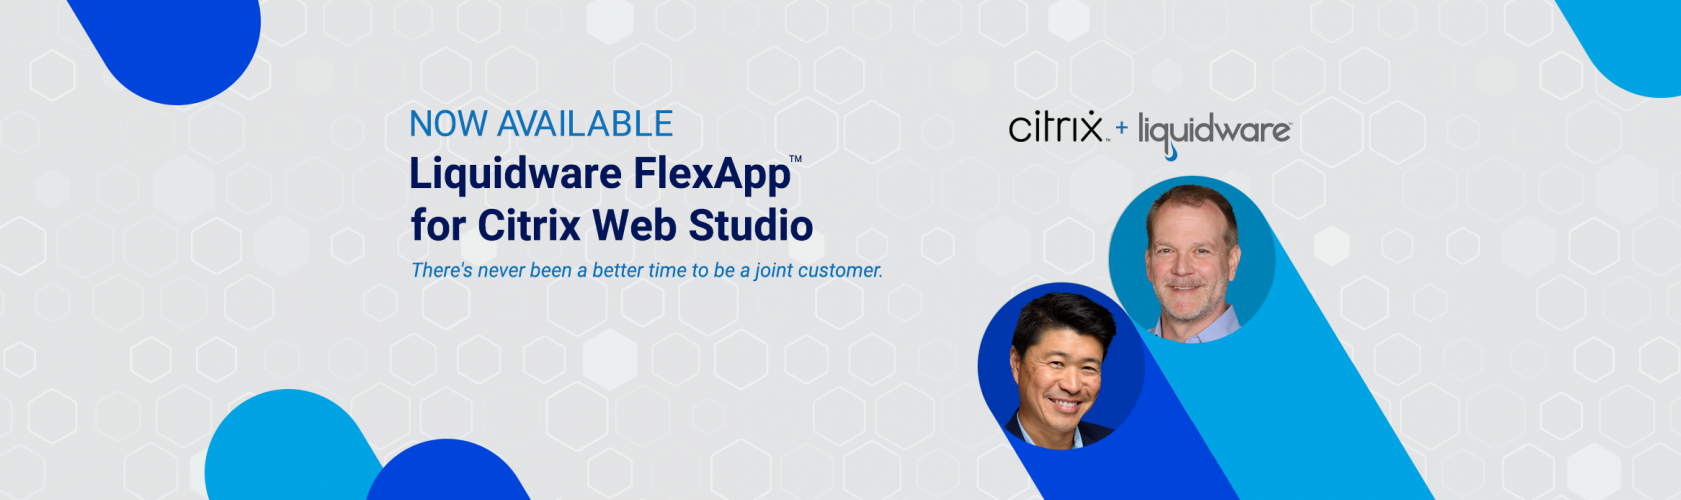 Now Available — Liquidware FlexApp for Citrix Web Studio